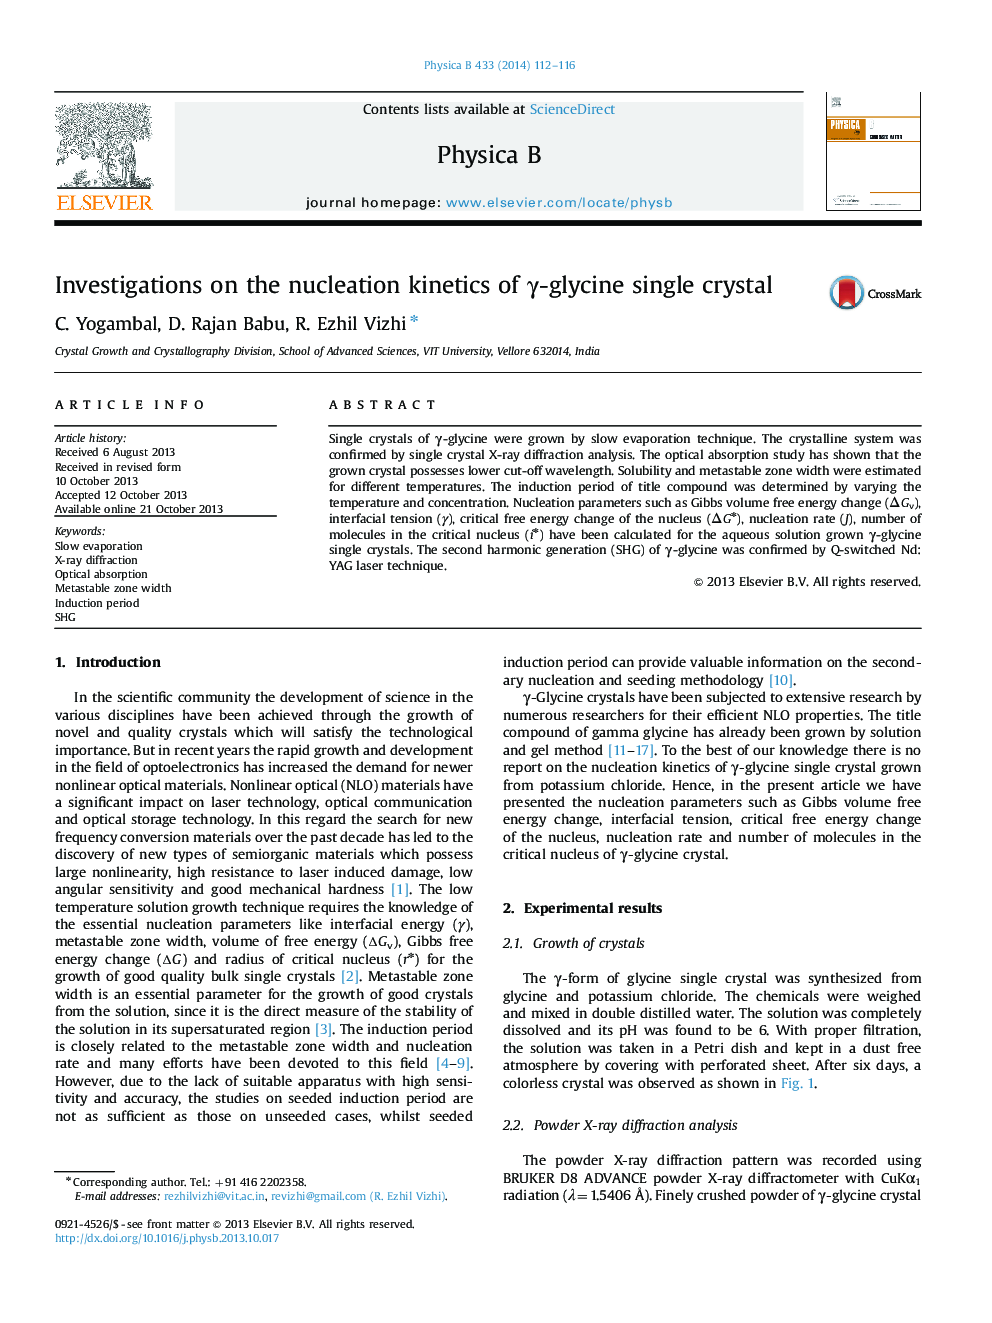 Investigations on the nucleation kinetics of Î³-glycine single crystal